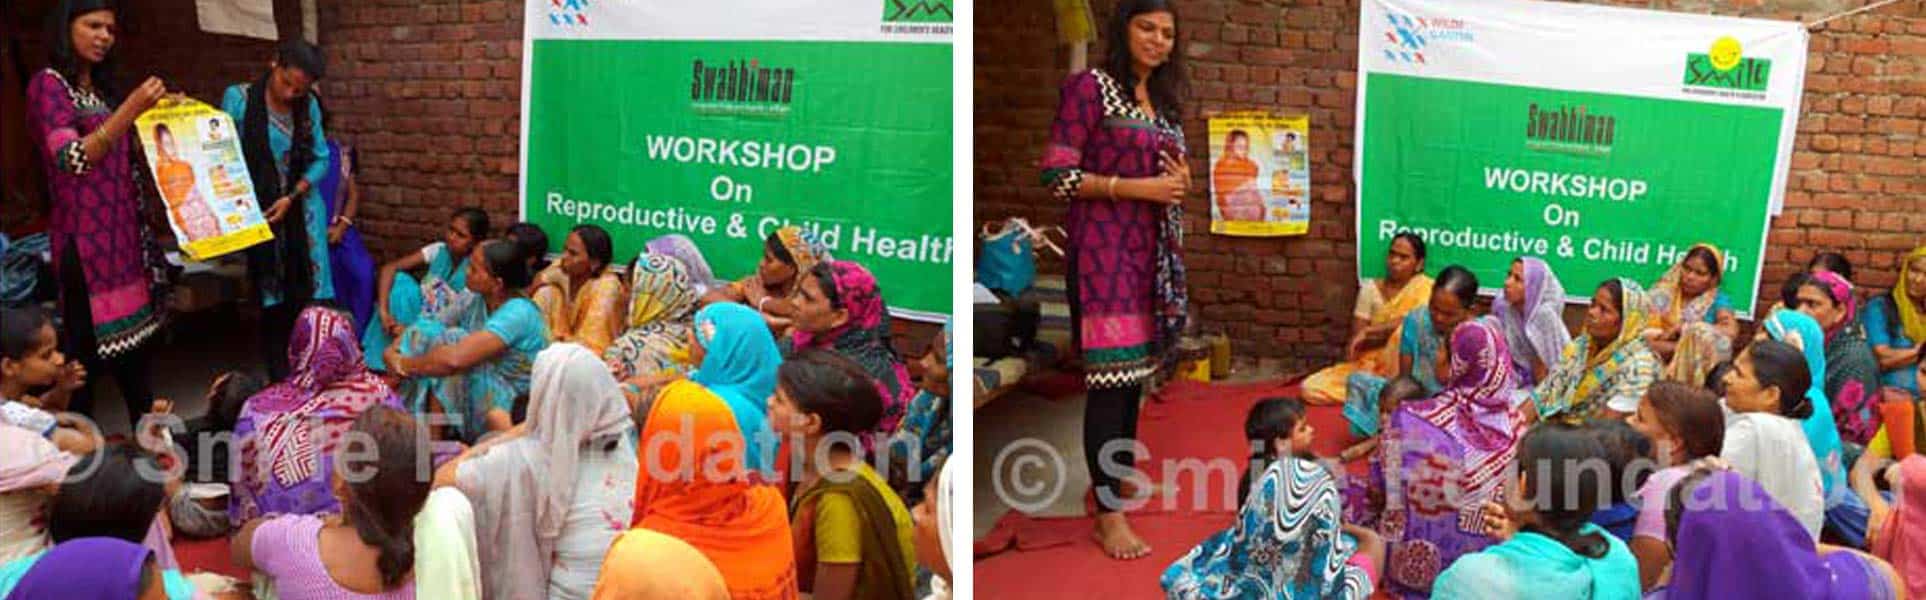 Workshop on reproductive and child health for women of Shashi Garden slum area, Delhi